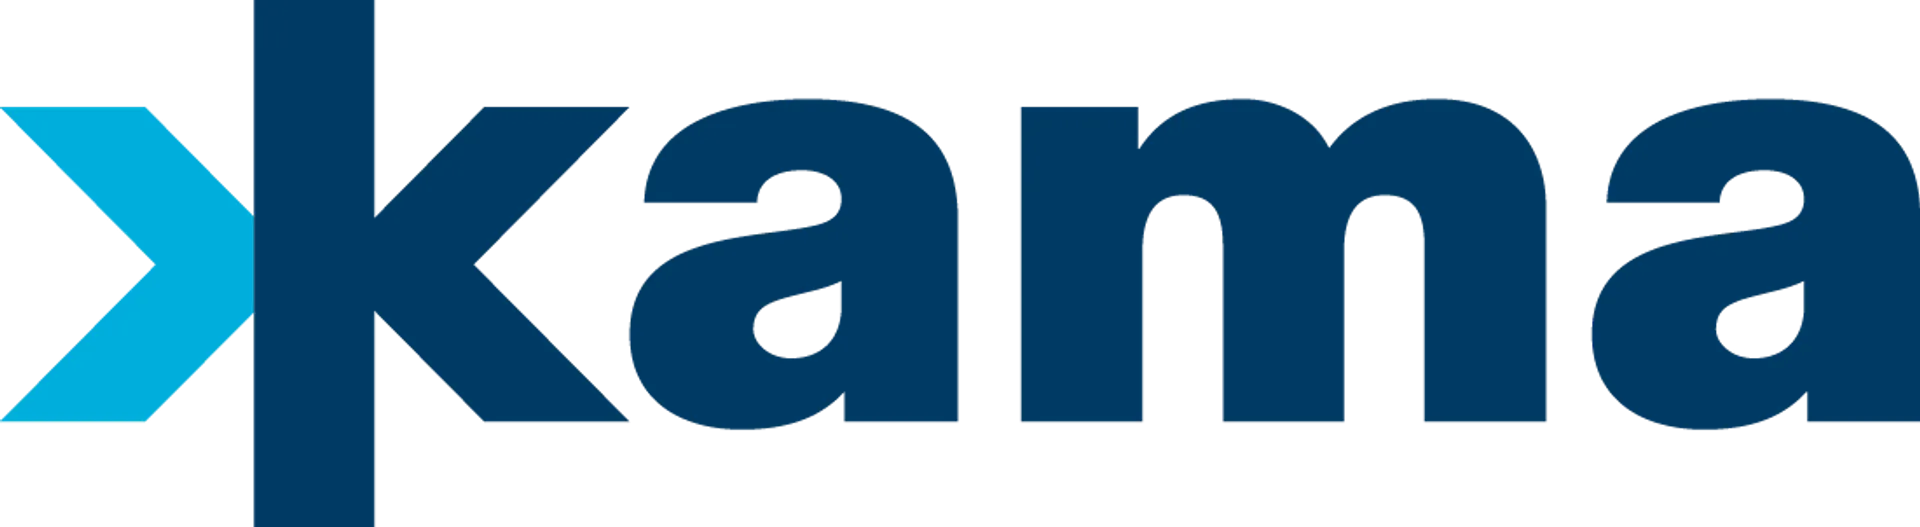 KAMA logo of current catalogue